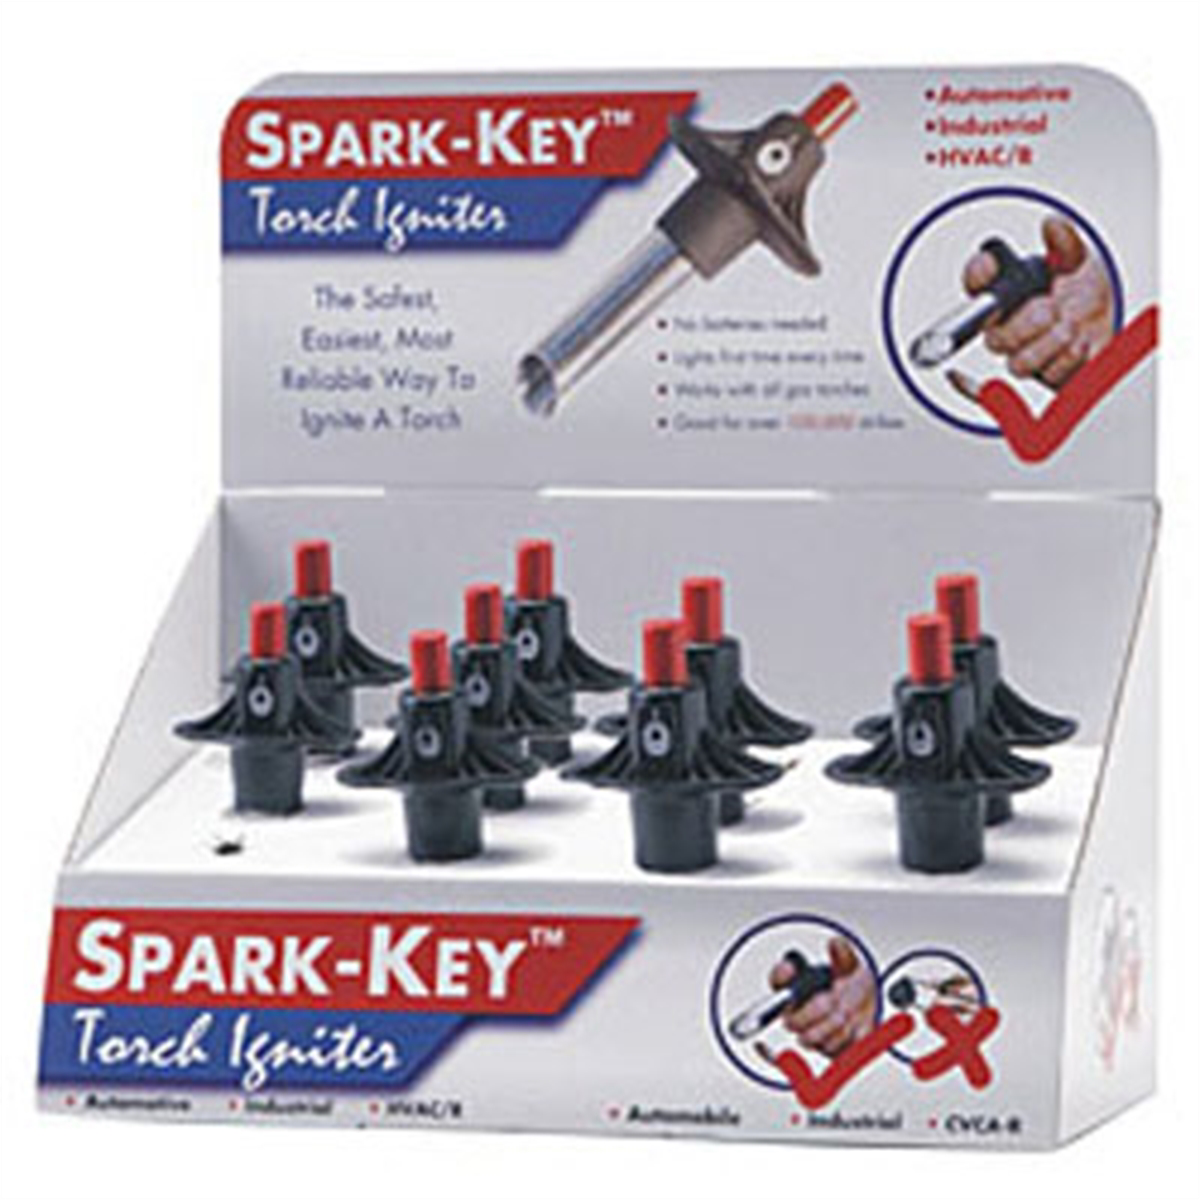 Spark-Key Torch Igniter 12 Pk Counter Display